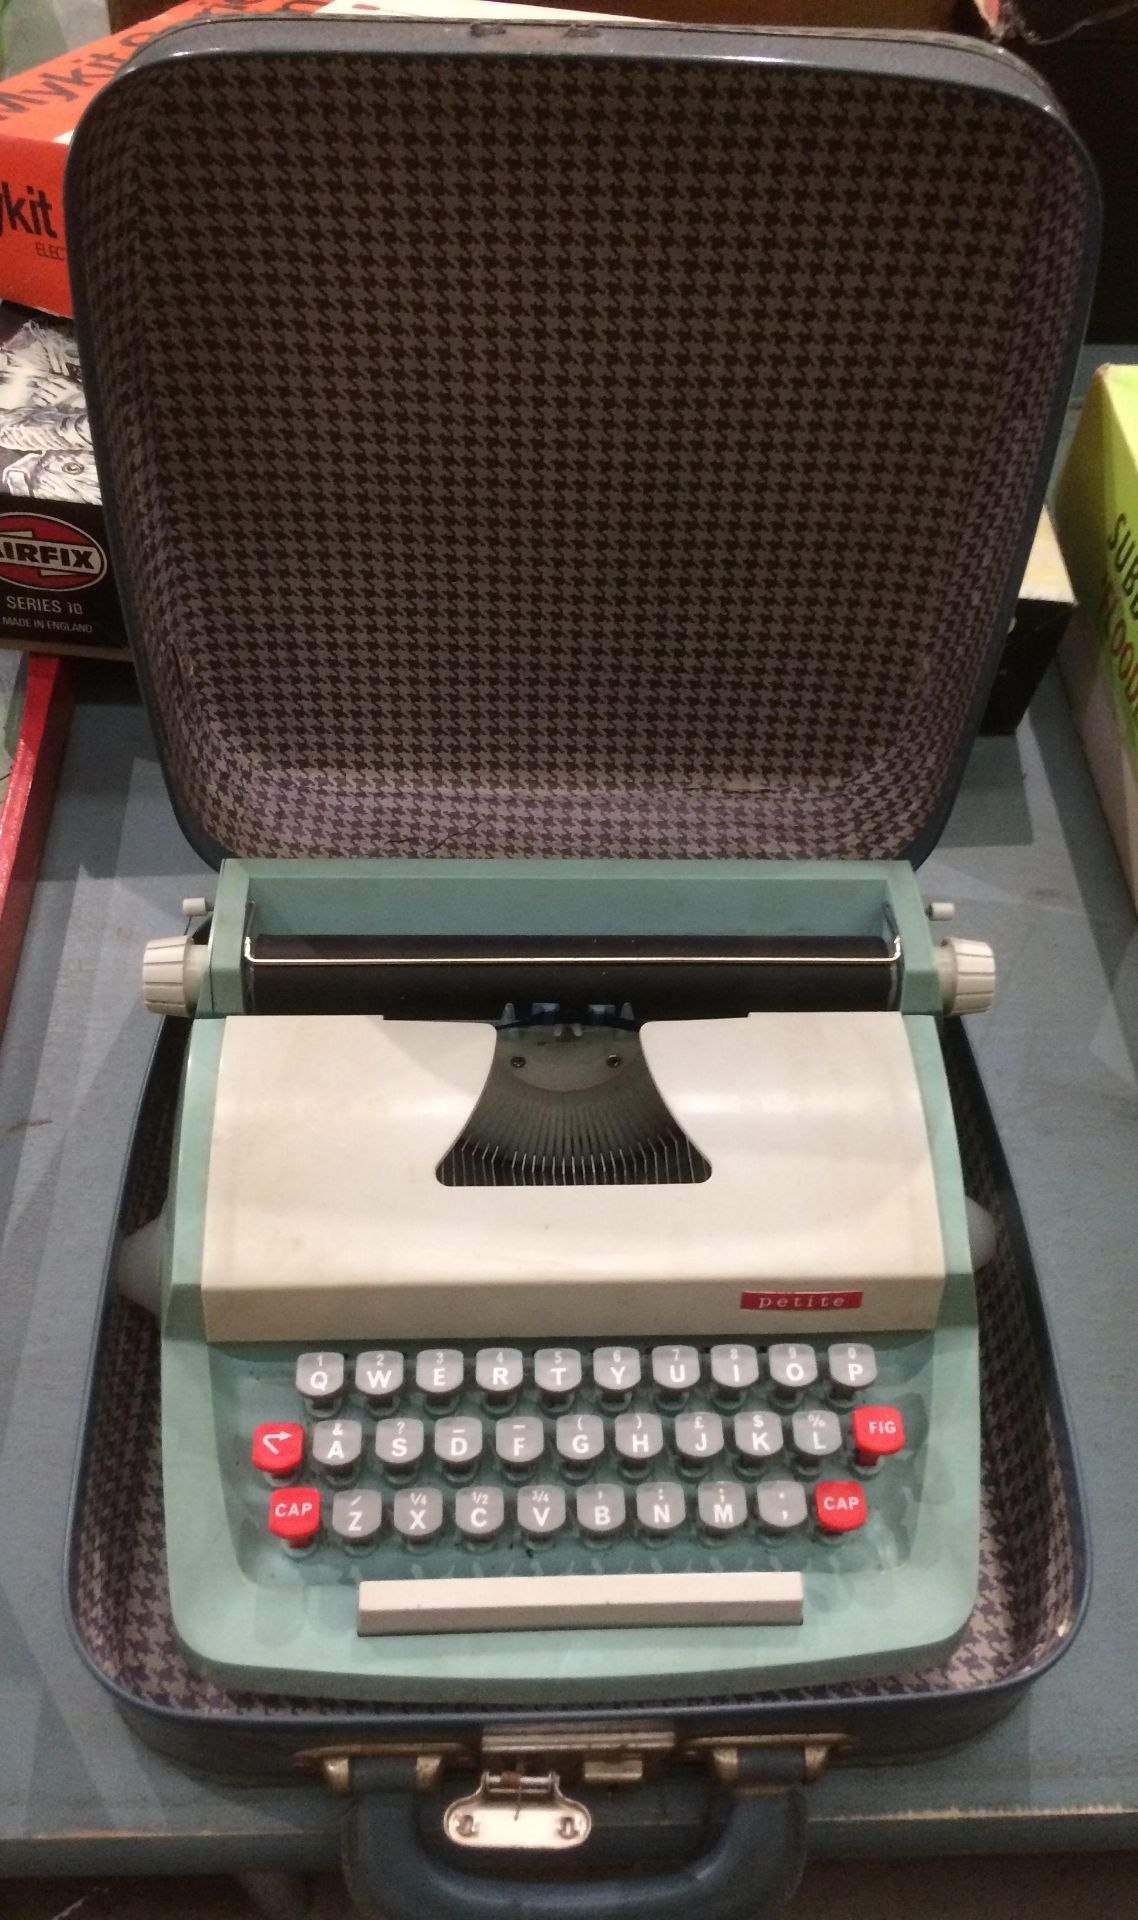 A child's Petite typewriter in carry case - case lock damaged